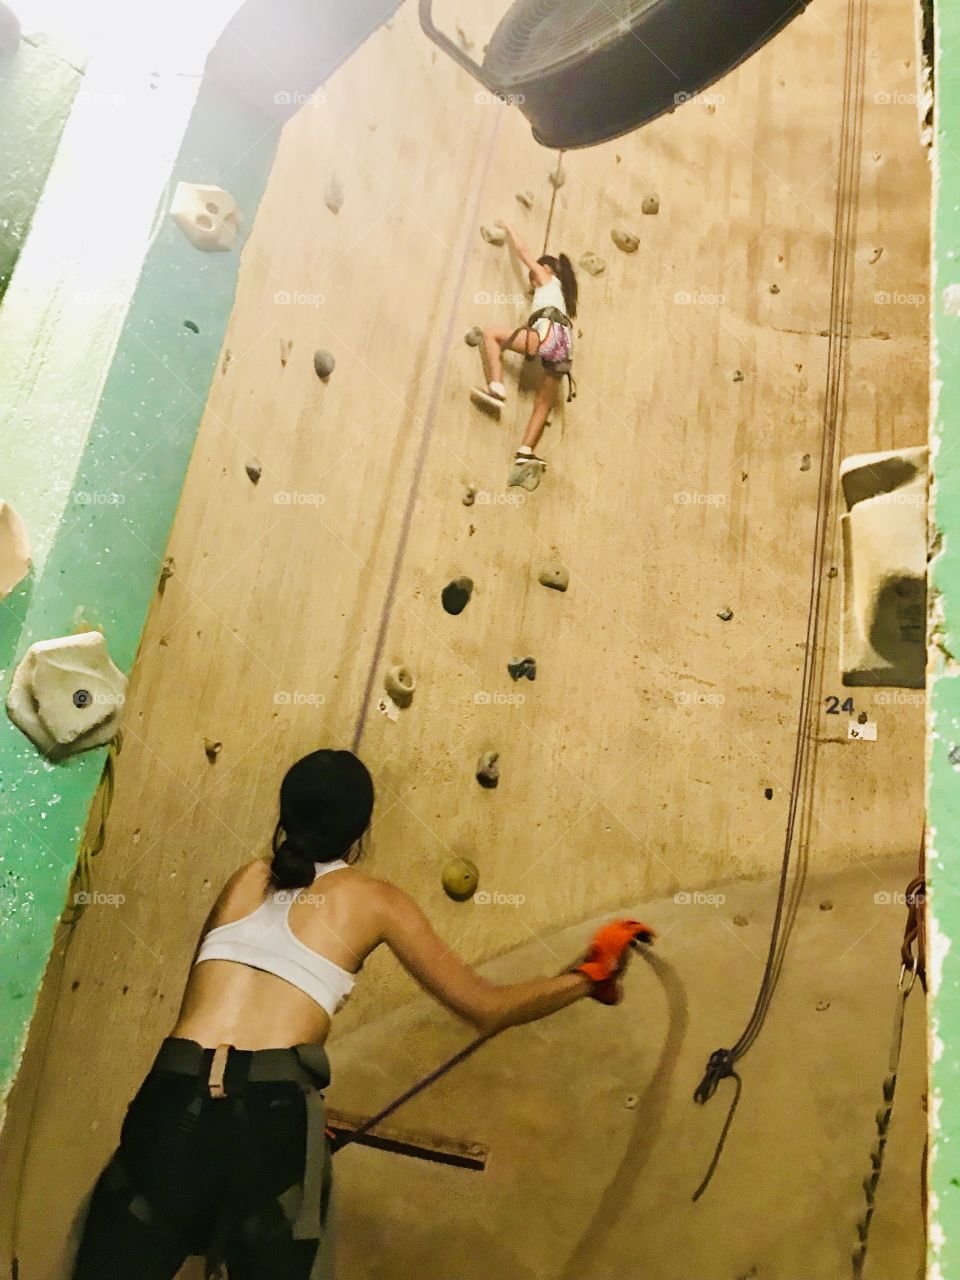 Wife and daughter indoor rock climbing